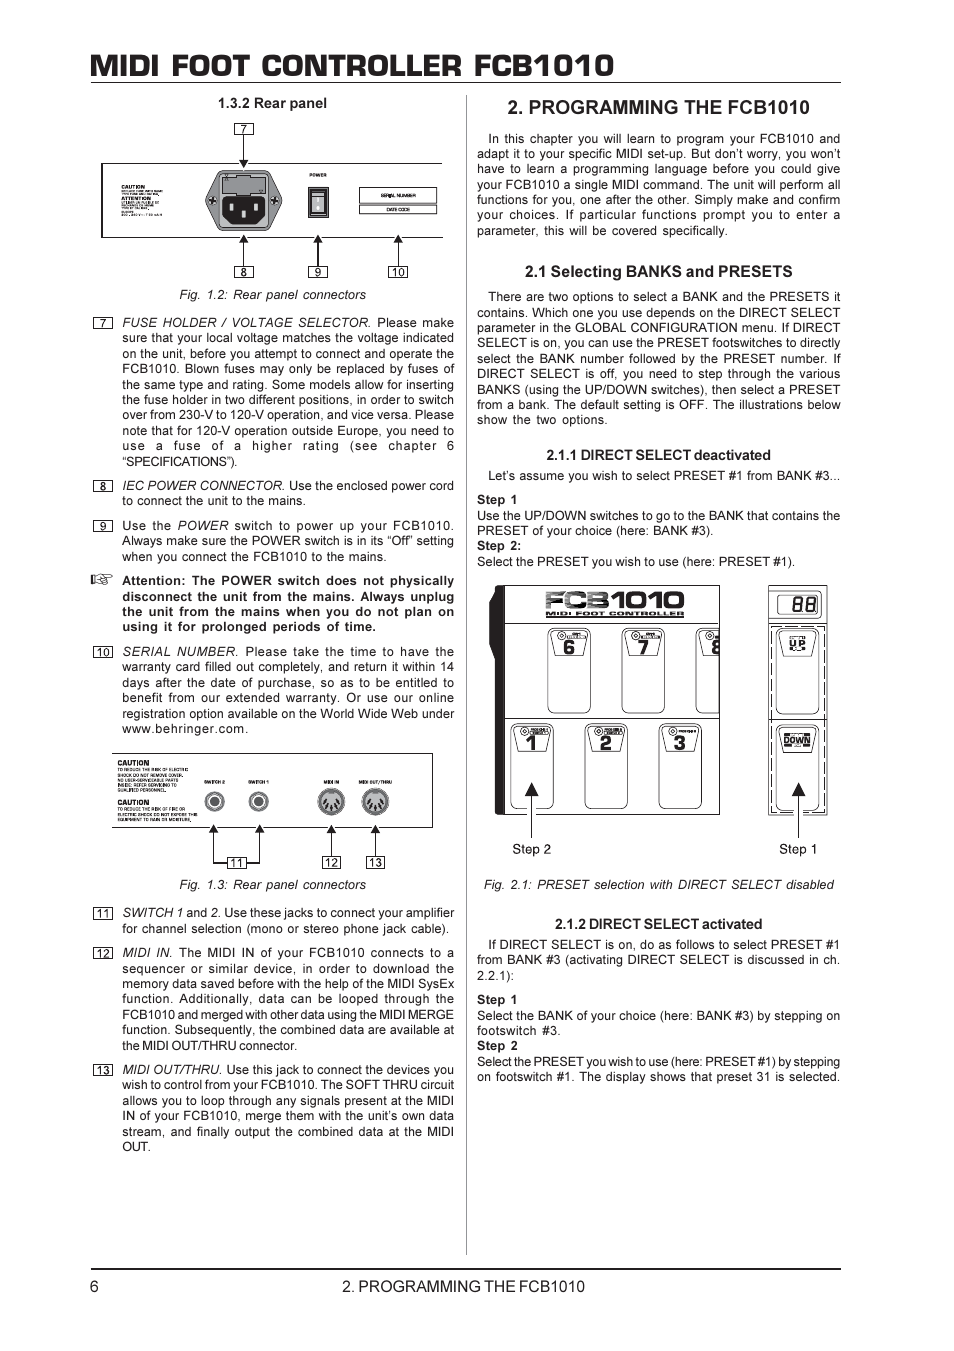 Midi foot controller fcb1010, Programming the fcb1010 | Behringer FCB1010  User Manual | Page 6 / 16 | Original mode